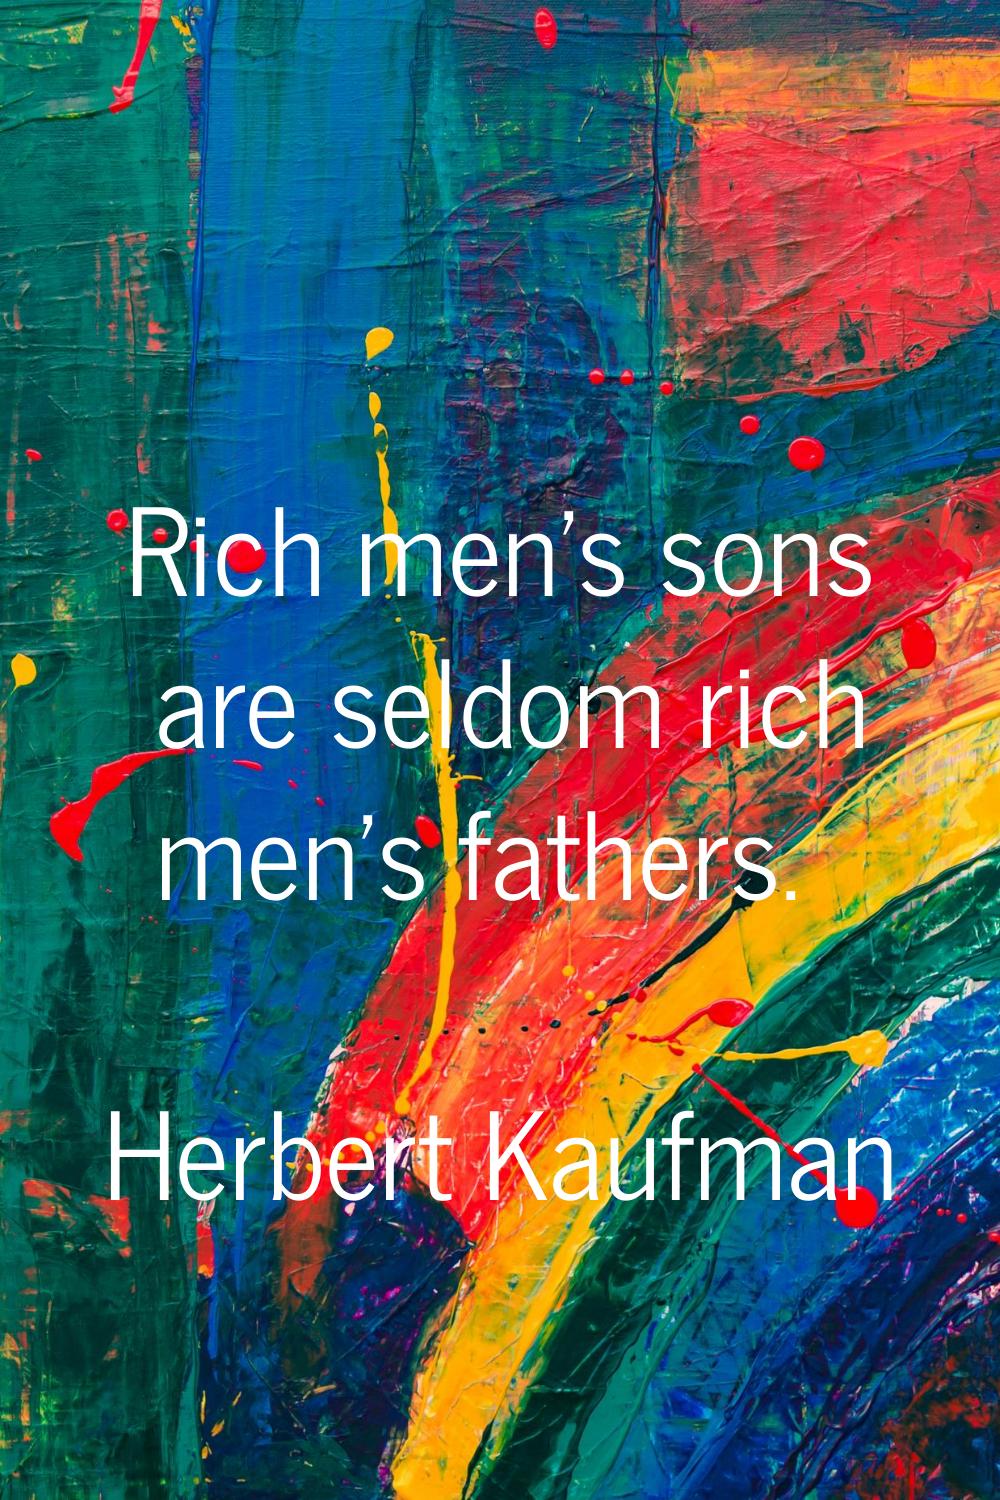 Rich men's sons are seldom rich men's fathers.